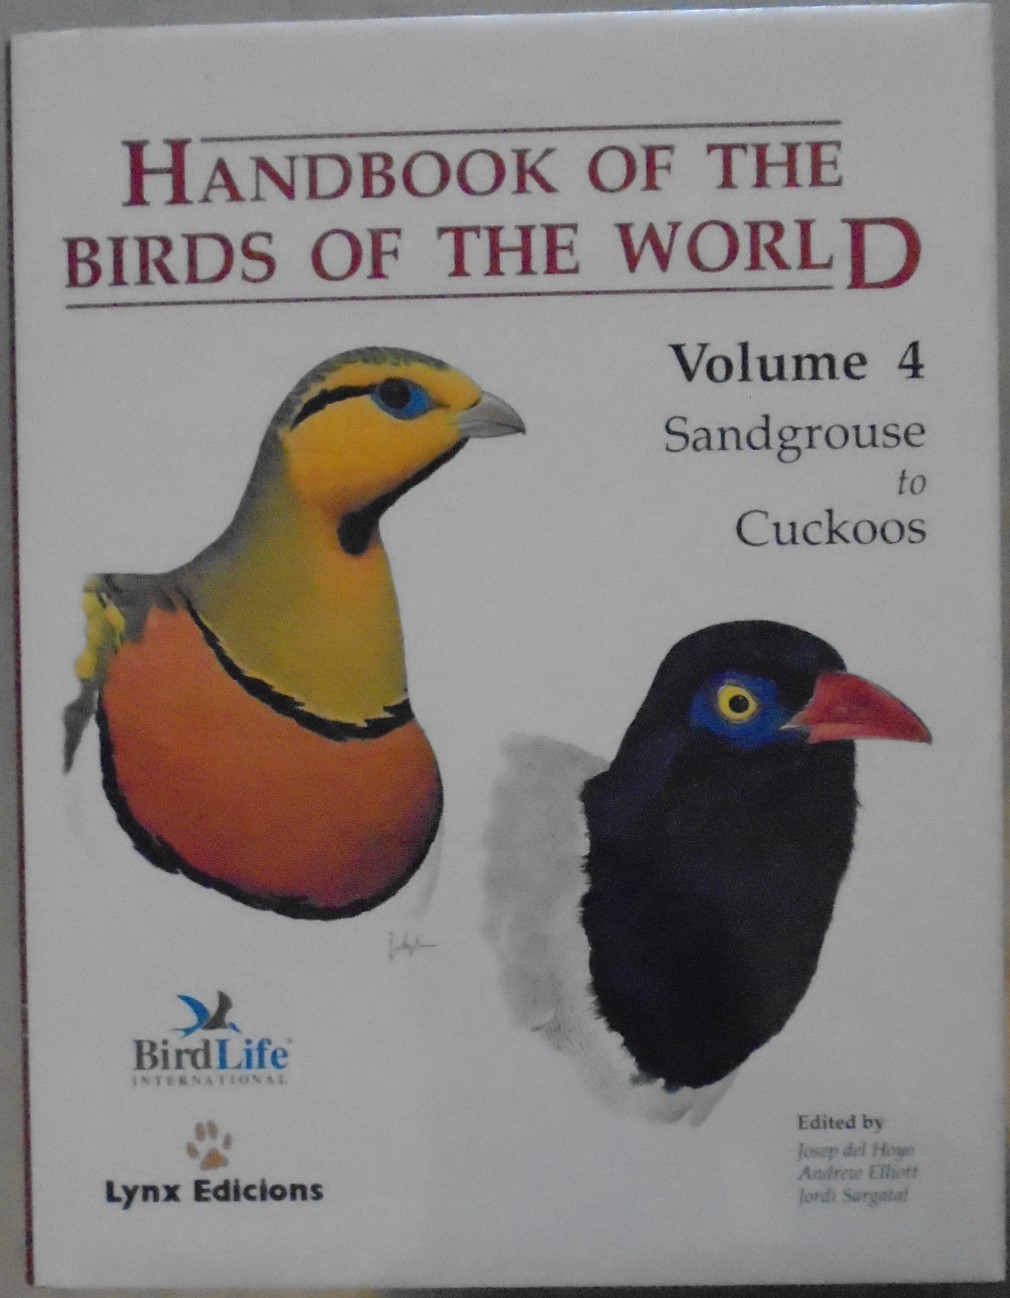 Handbook of the Birds of the World. Vol. 4 : Sandgrouse to Cuckoos - Del Hoyo, Elliott, Sargatal